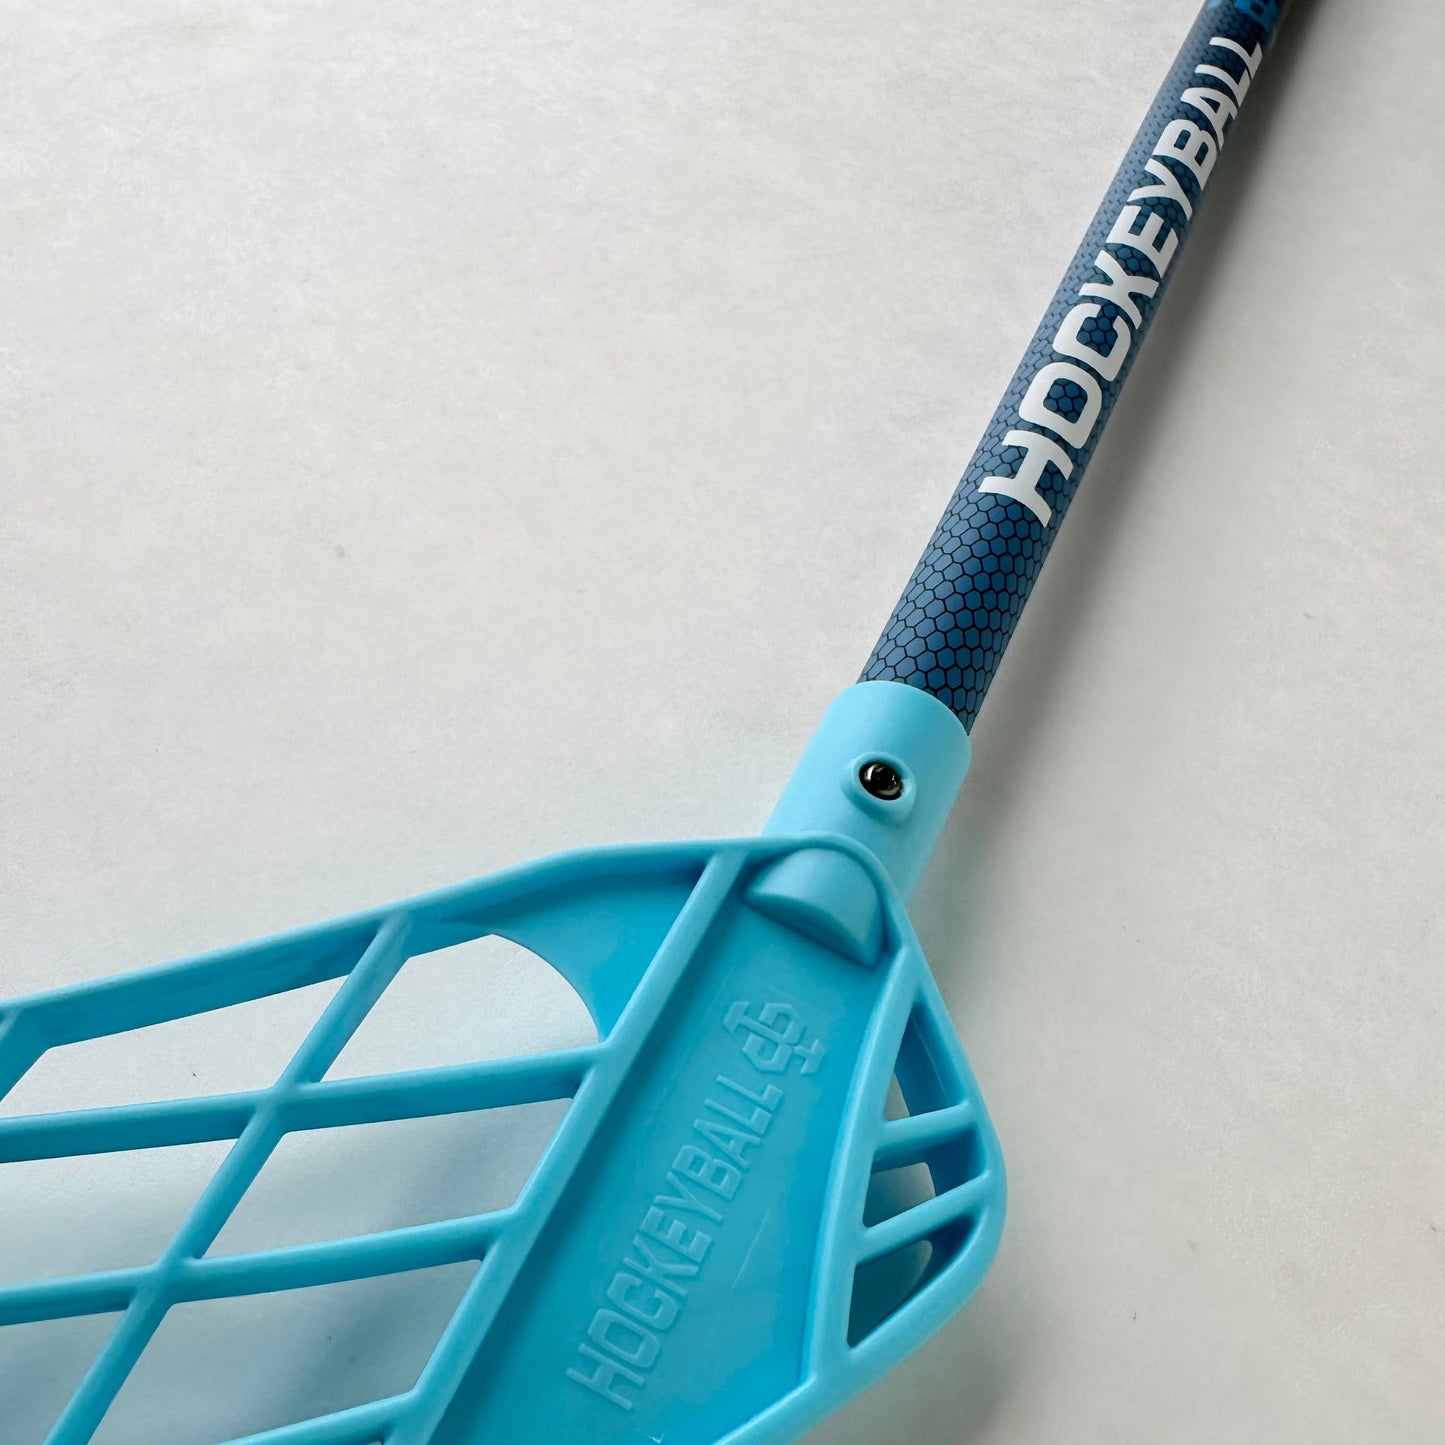 Hockeyball blue stick close up